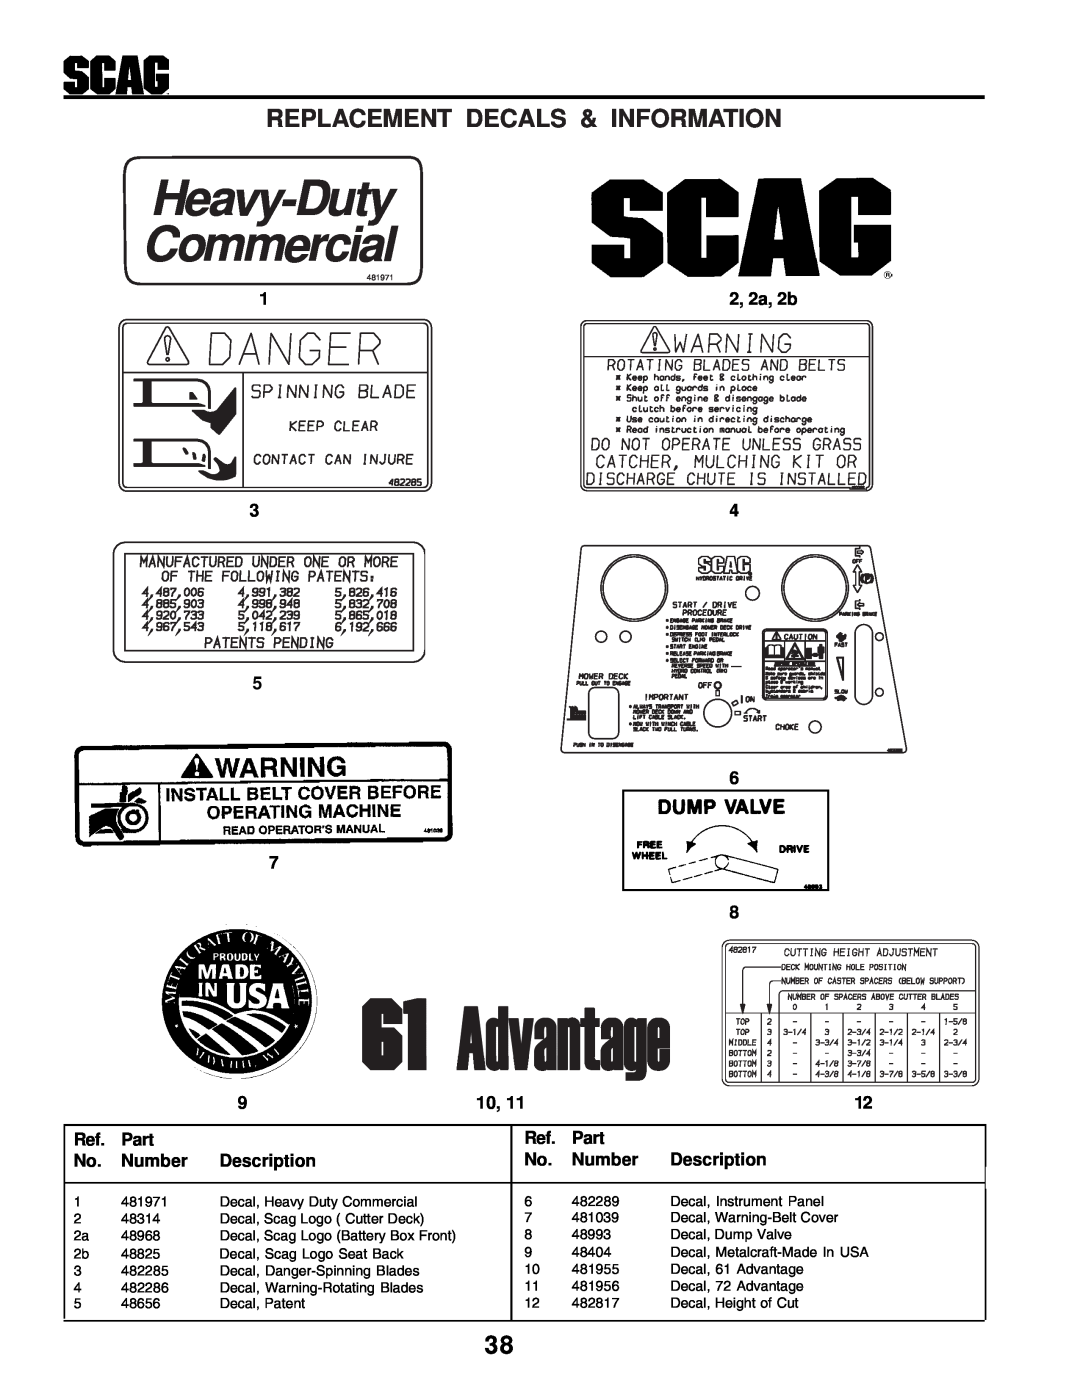 Scag Power Equipment STHM manual Heavy-Duty Commercial, 2, 2a, 2b, Part, Number, Description 